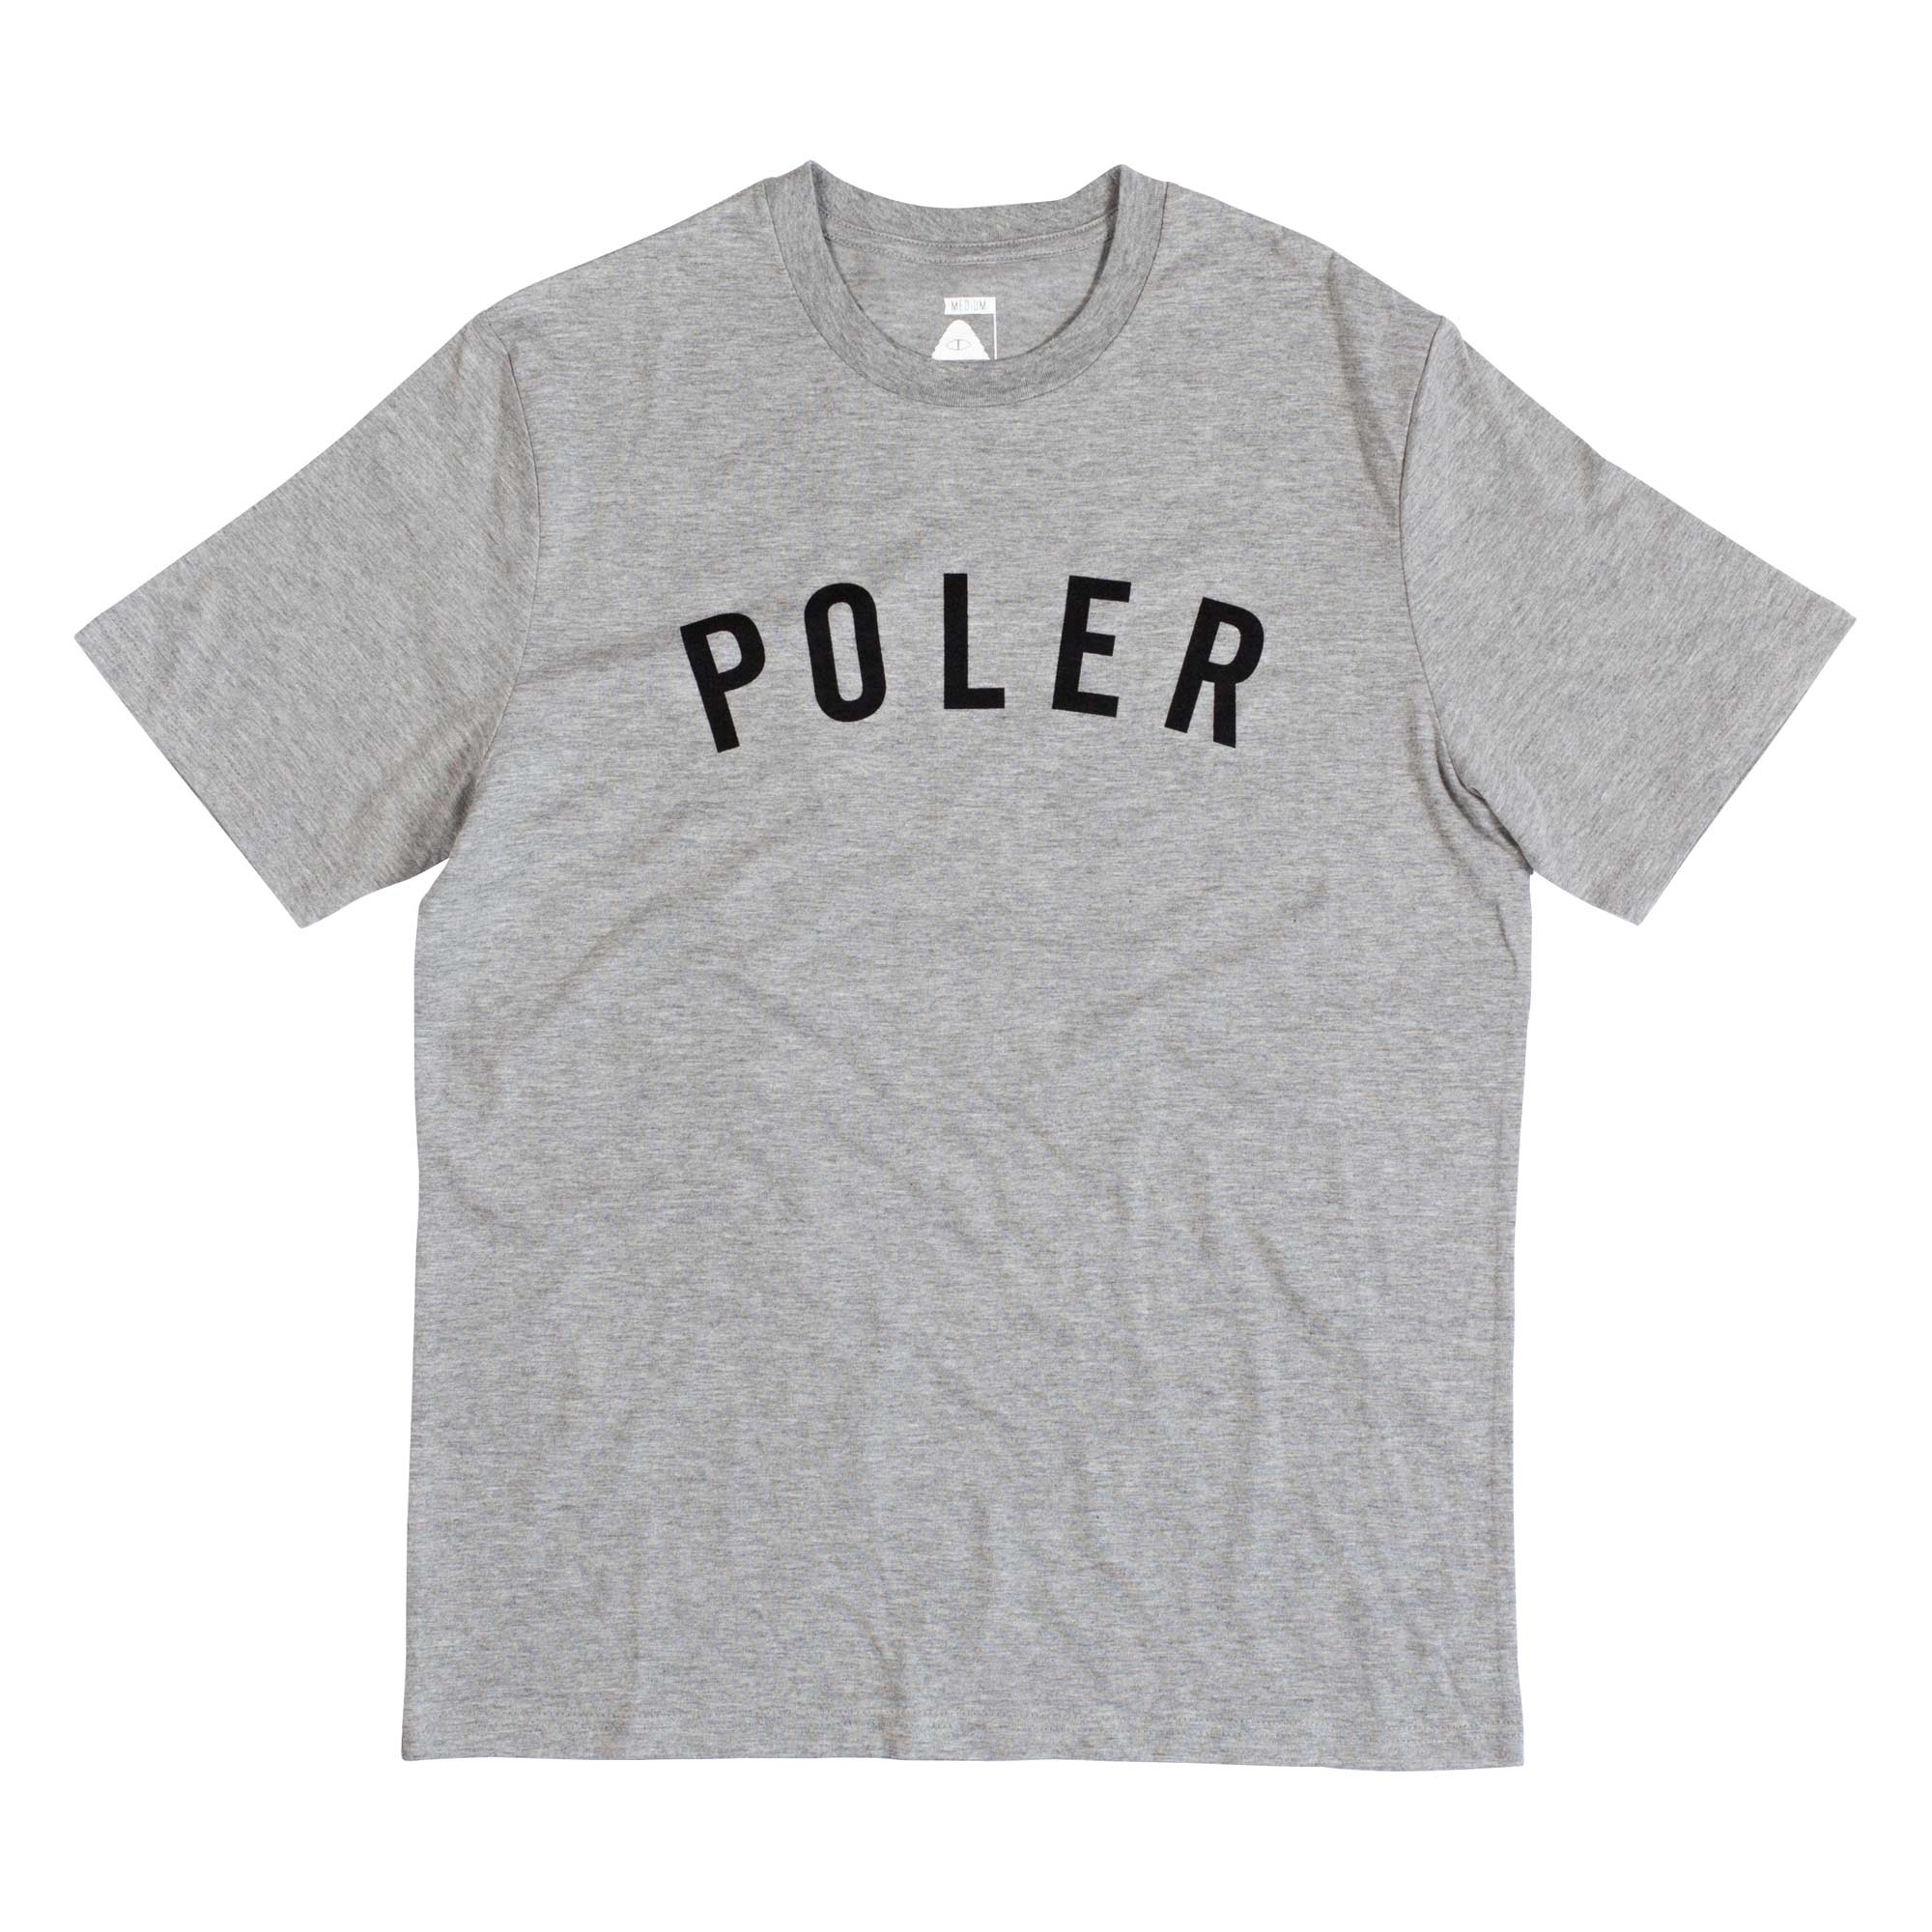 POLER T-Shirt STATE grey heather/black